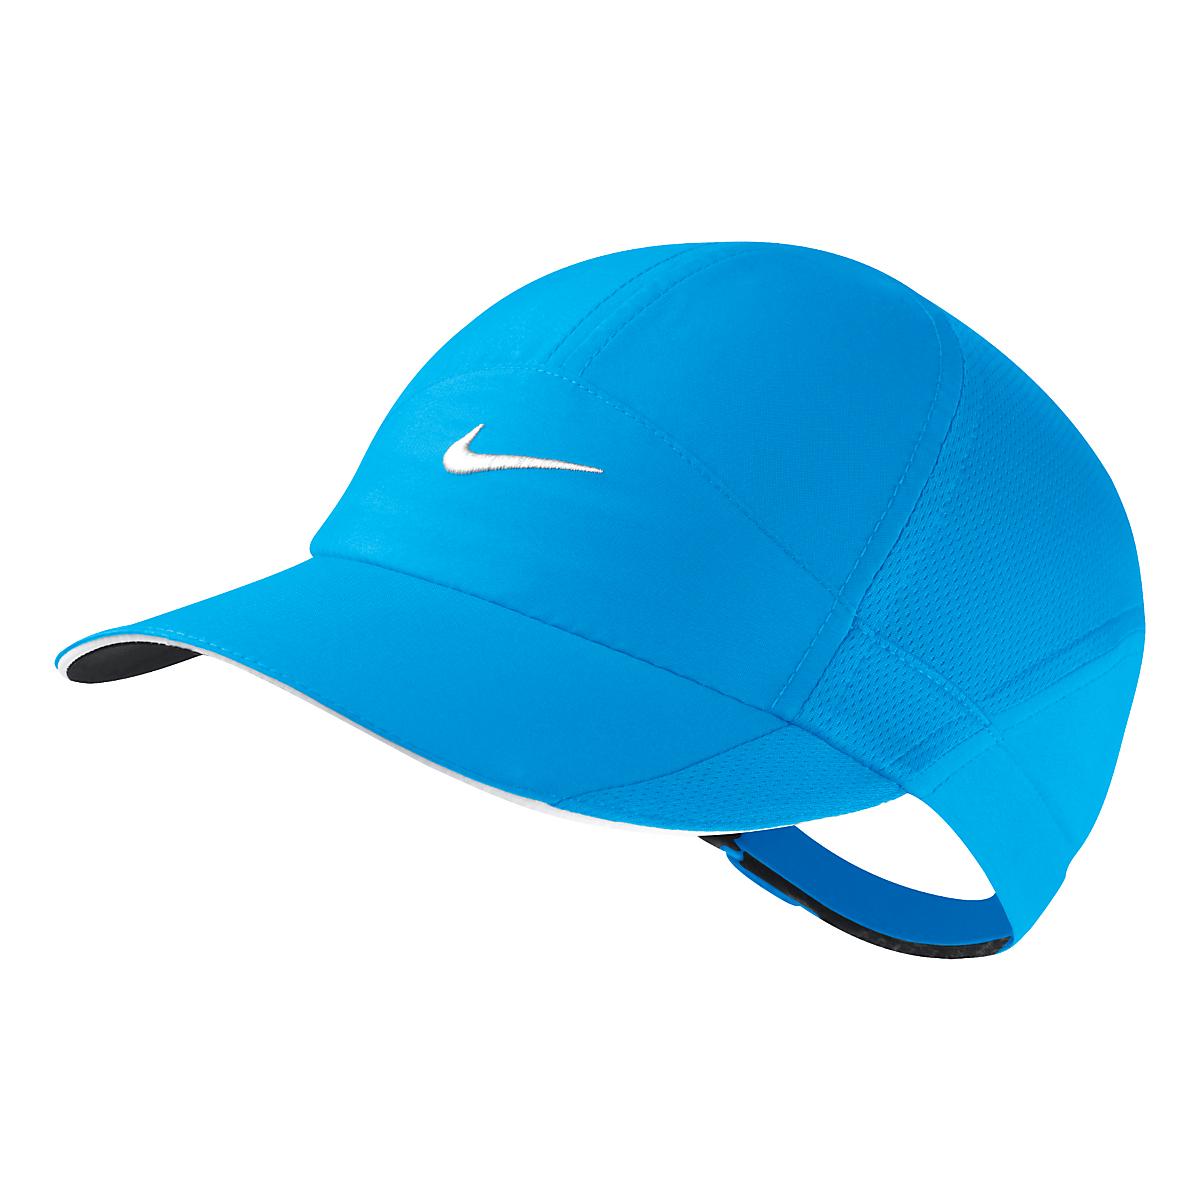 Womens Nike Featherlight Cap Headwear at Road Runner Sports